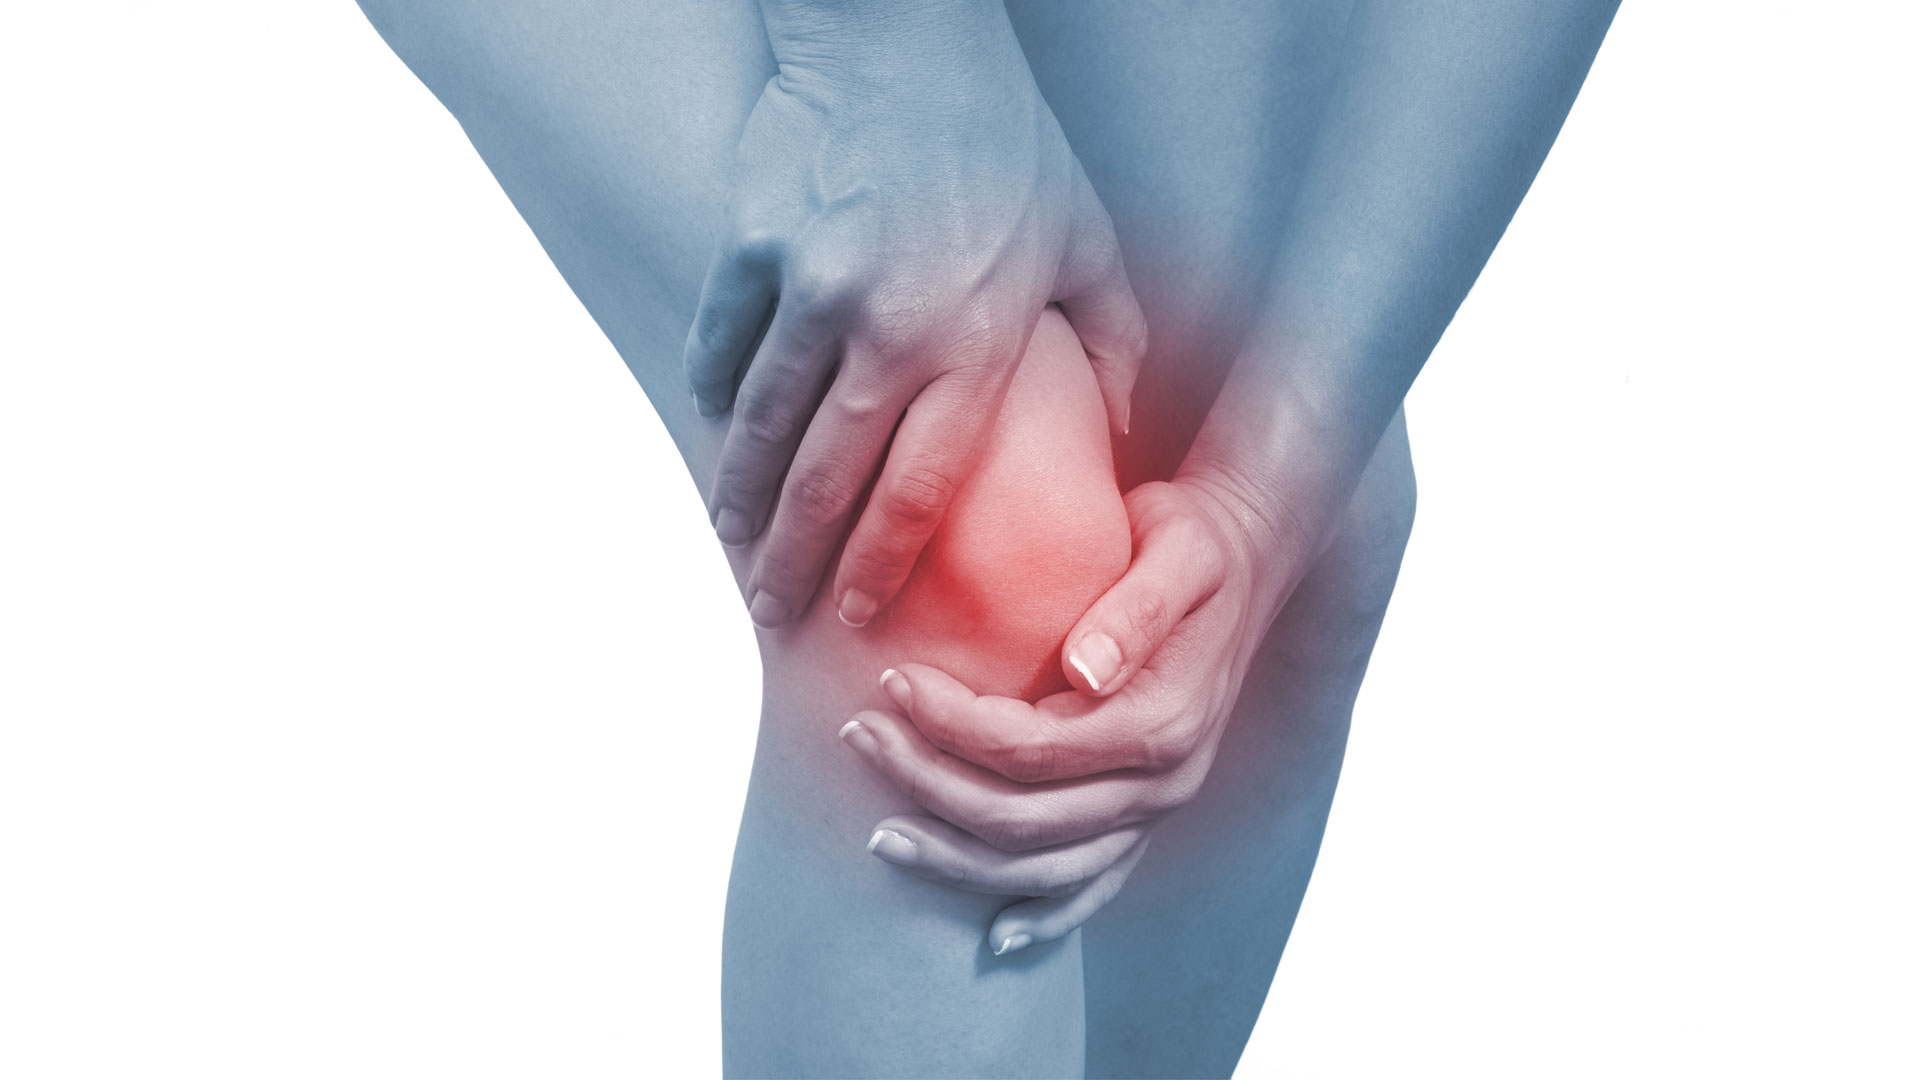 https://painhealth.csse.uwa.edu.au/wp-content/uploads/2016/04/painhealth-osteoarthritis-knee-pain-white-bg.jpg